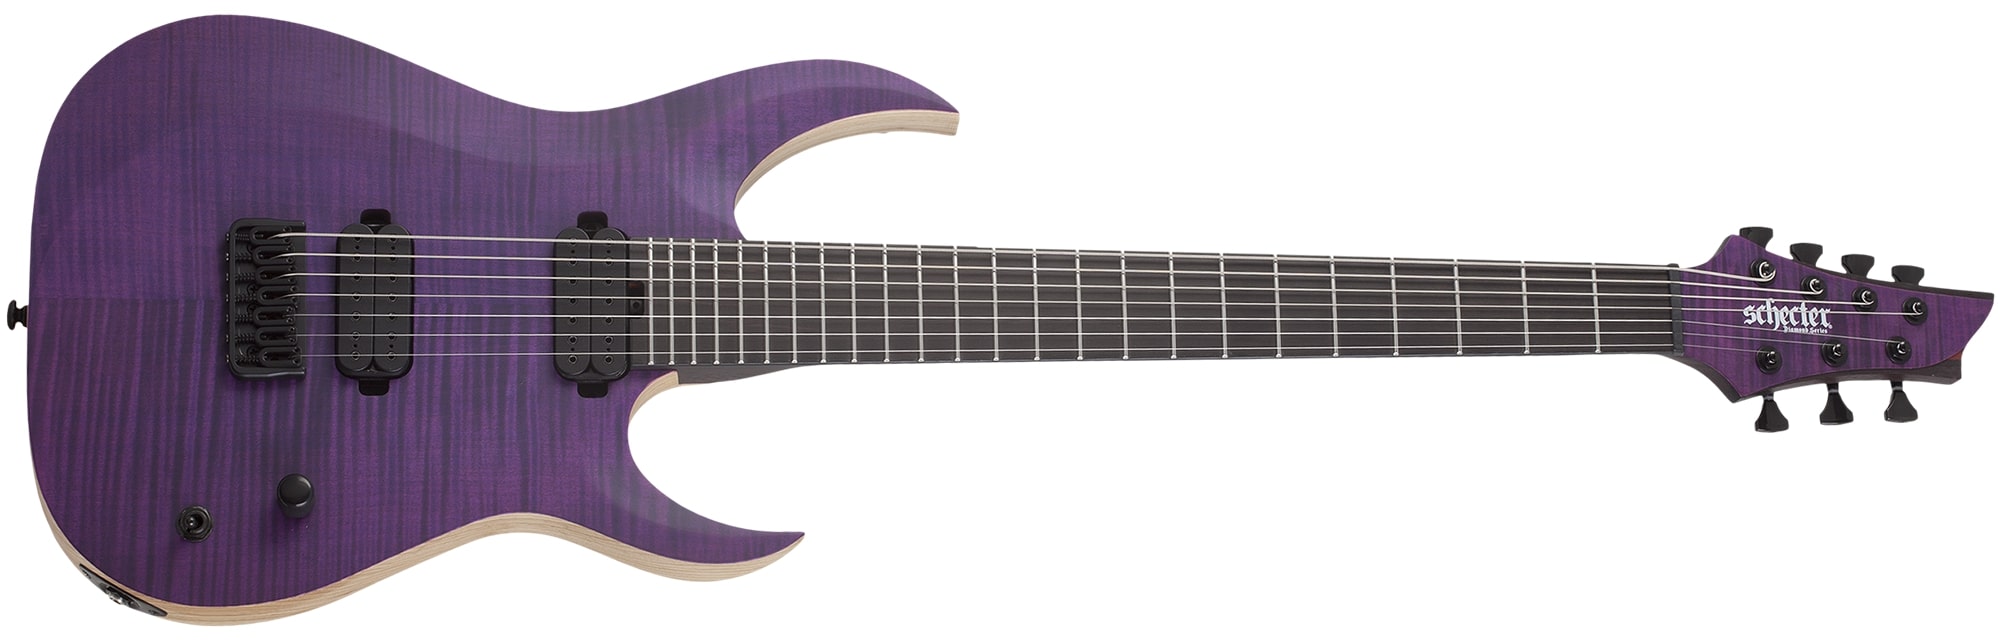 Schecter John Browne Tao-7 7 String Electric Guitar Satin Trans Purple 463-SHC